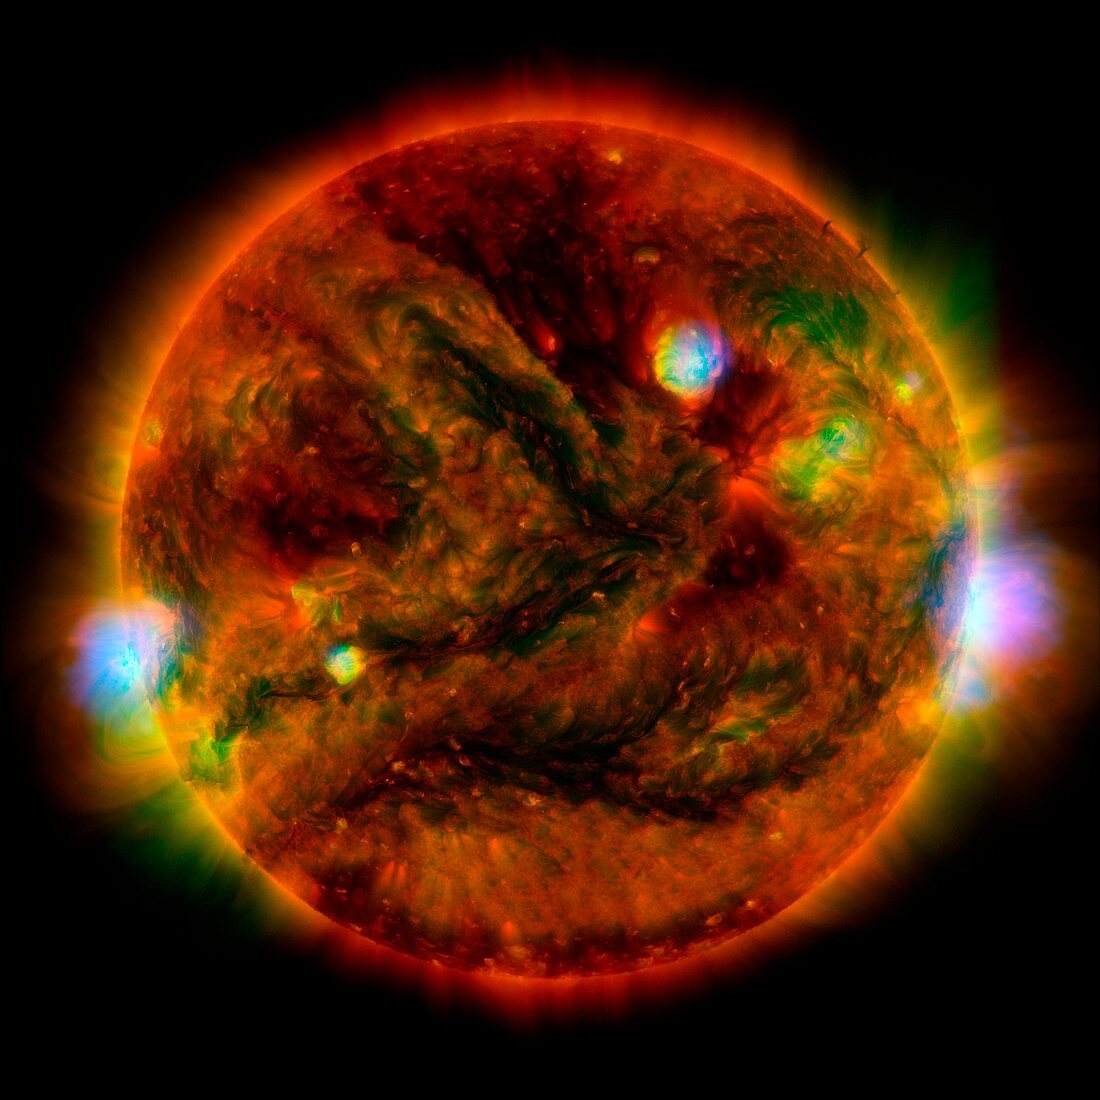 Active Sun, composite image